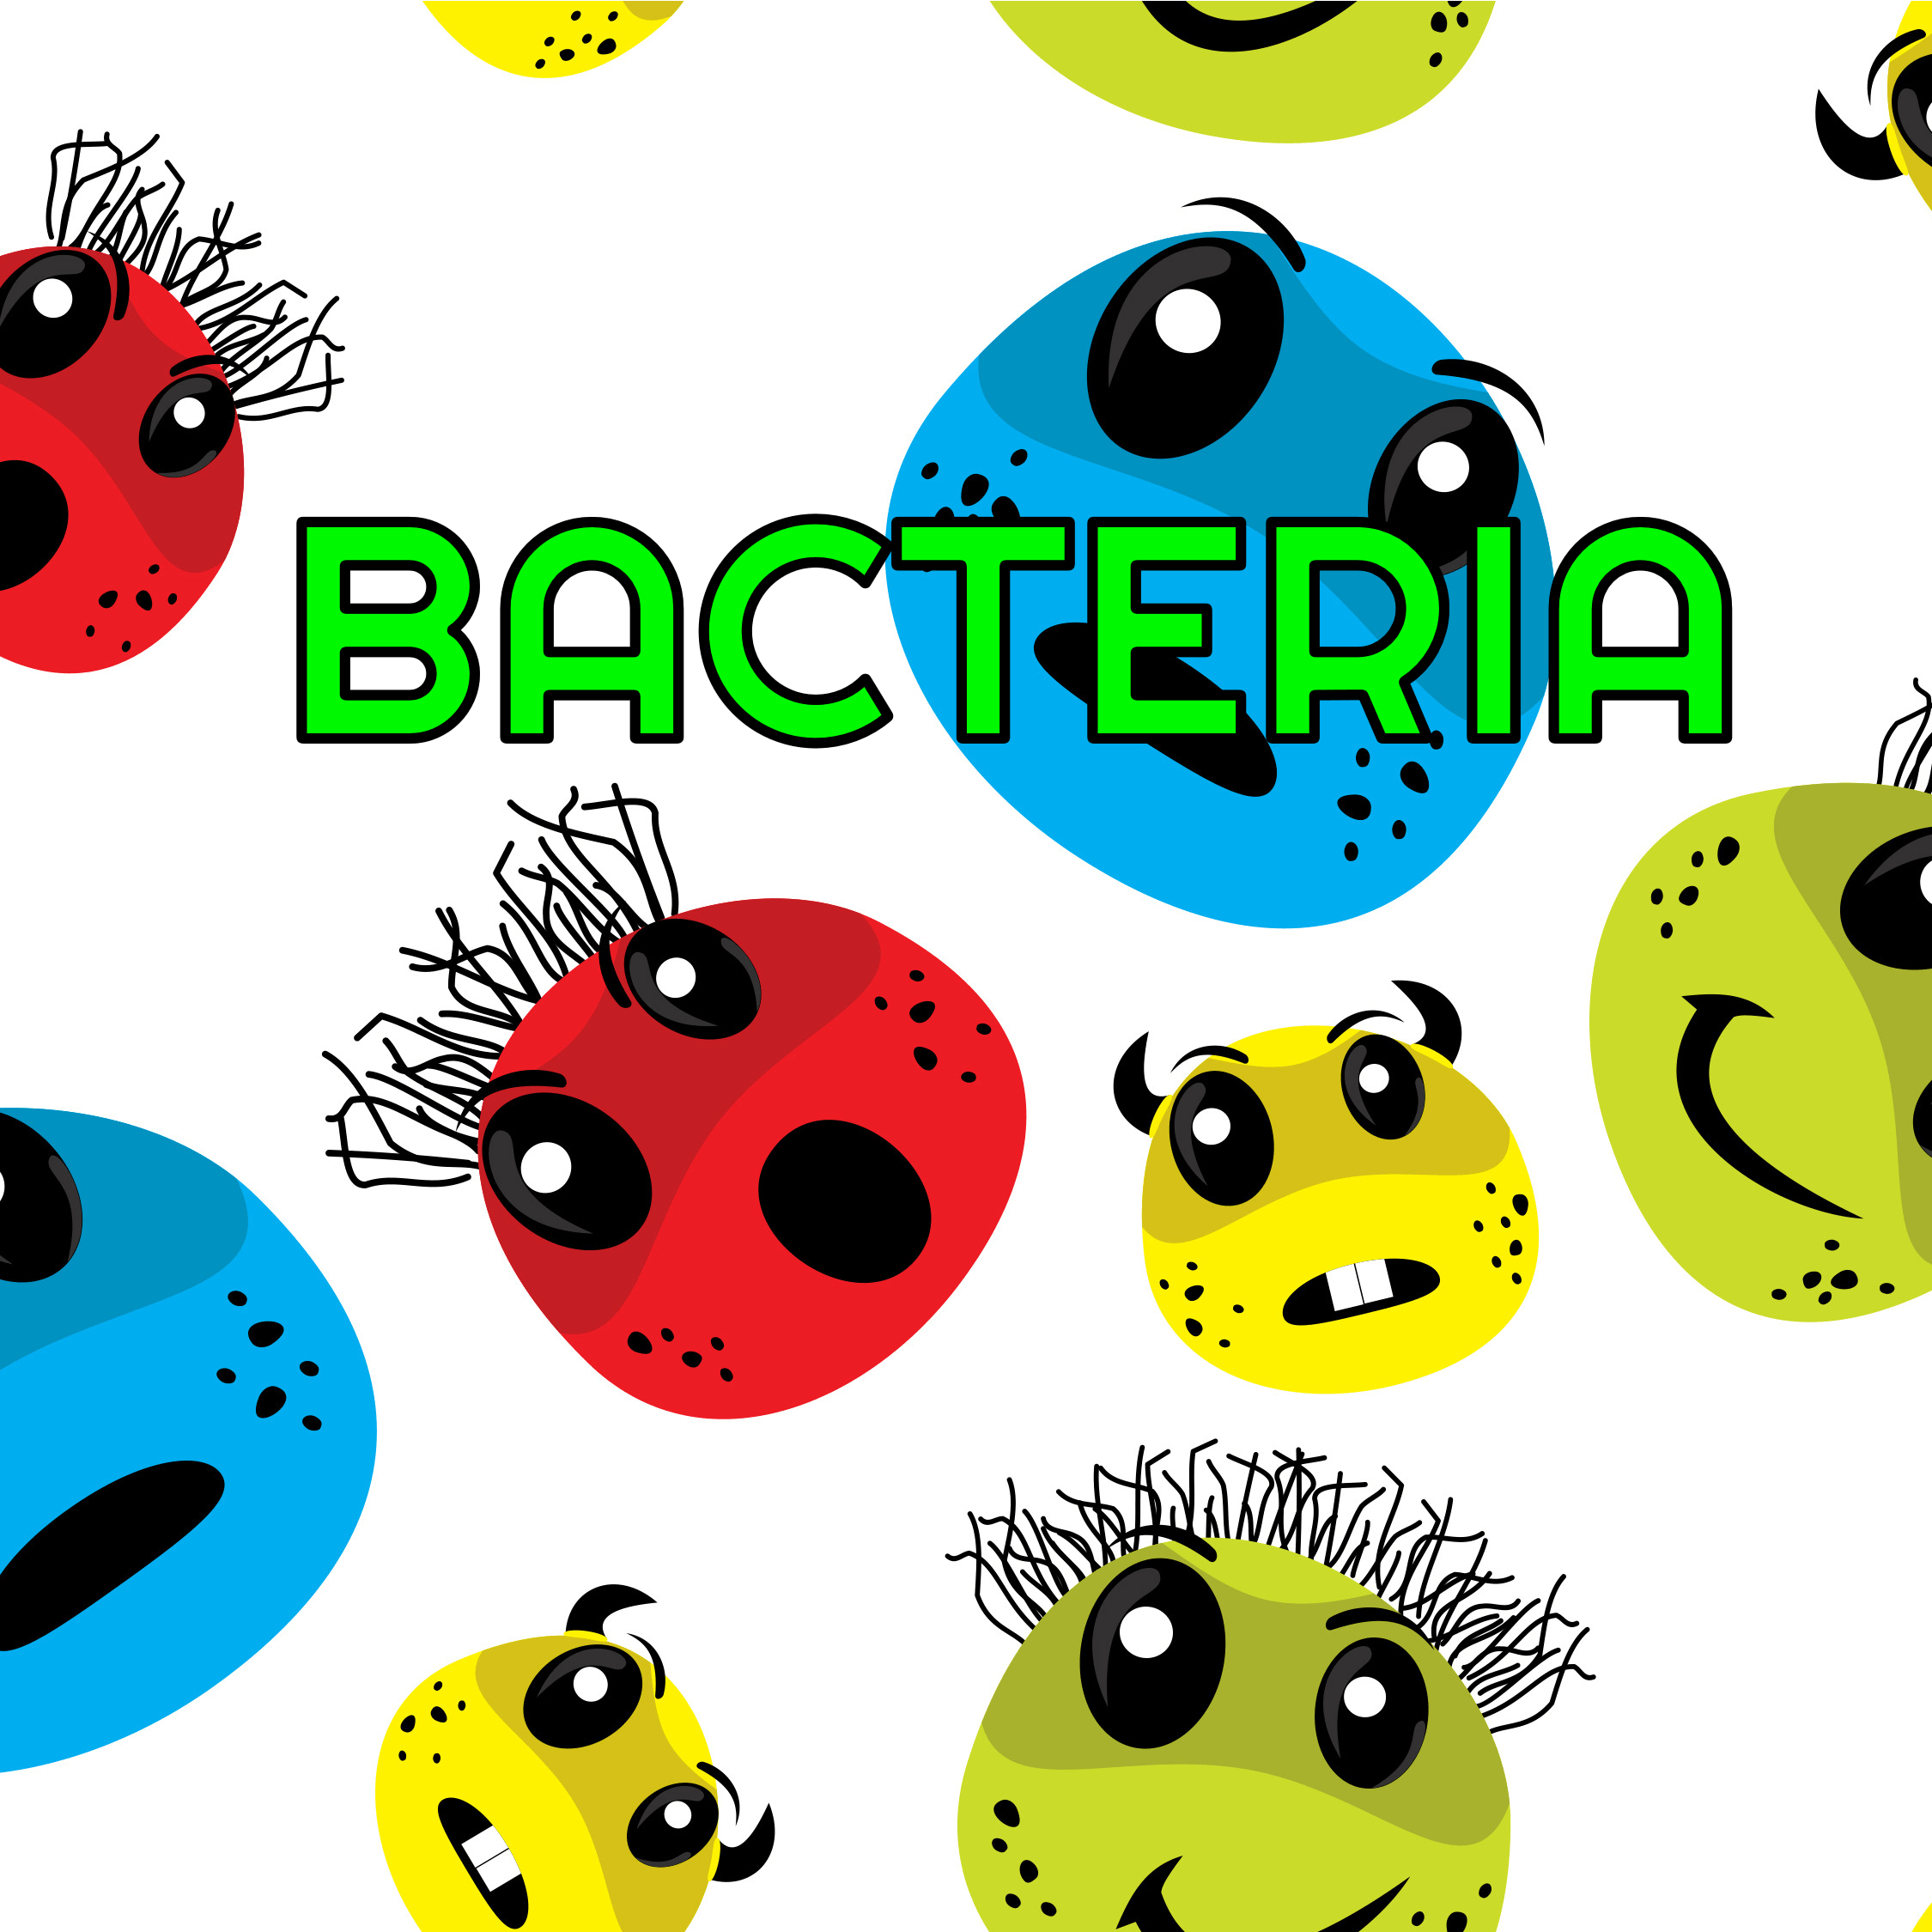 232 - Bacteria